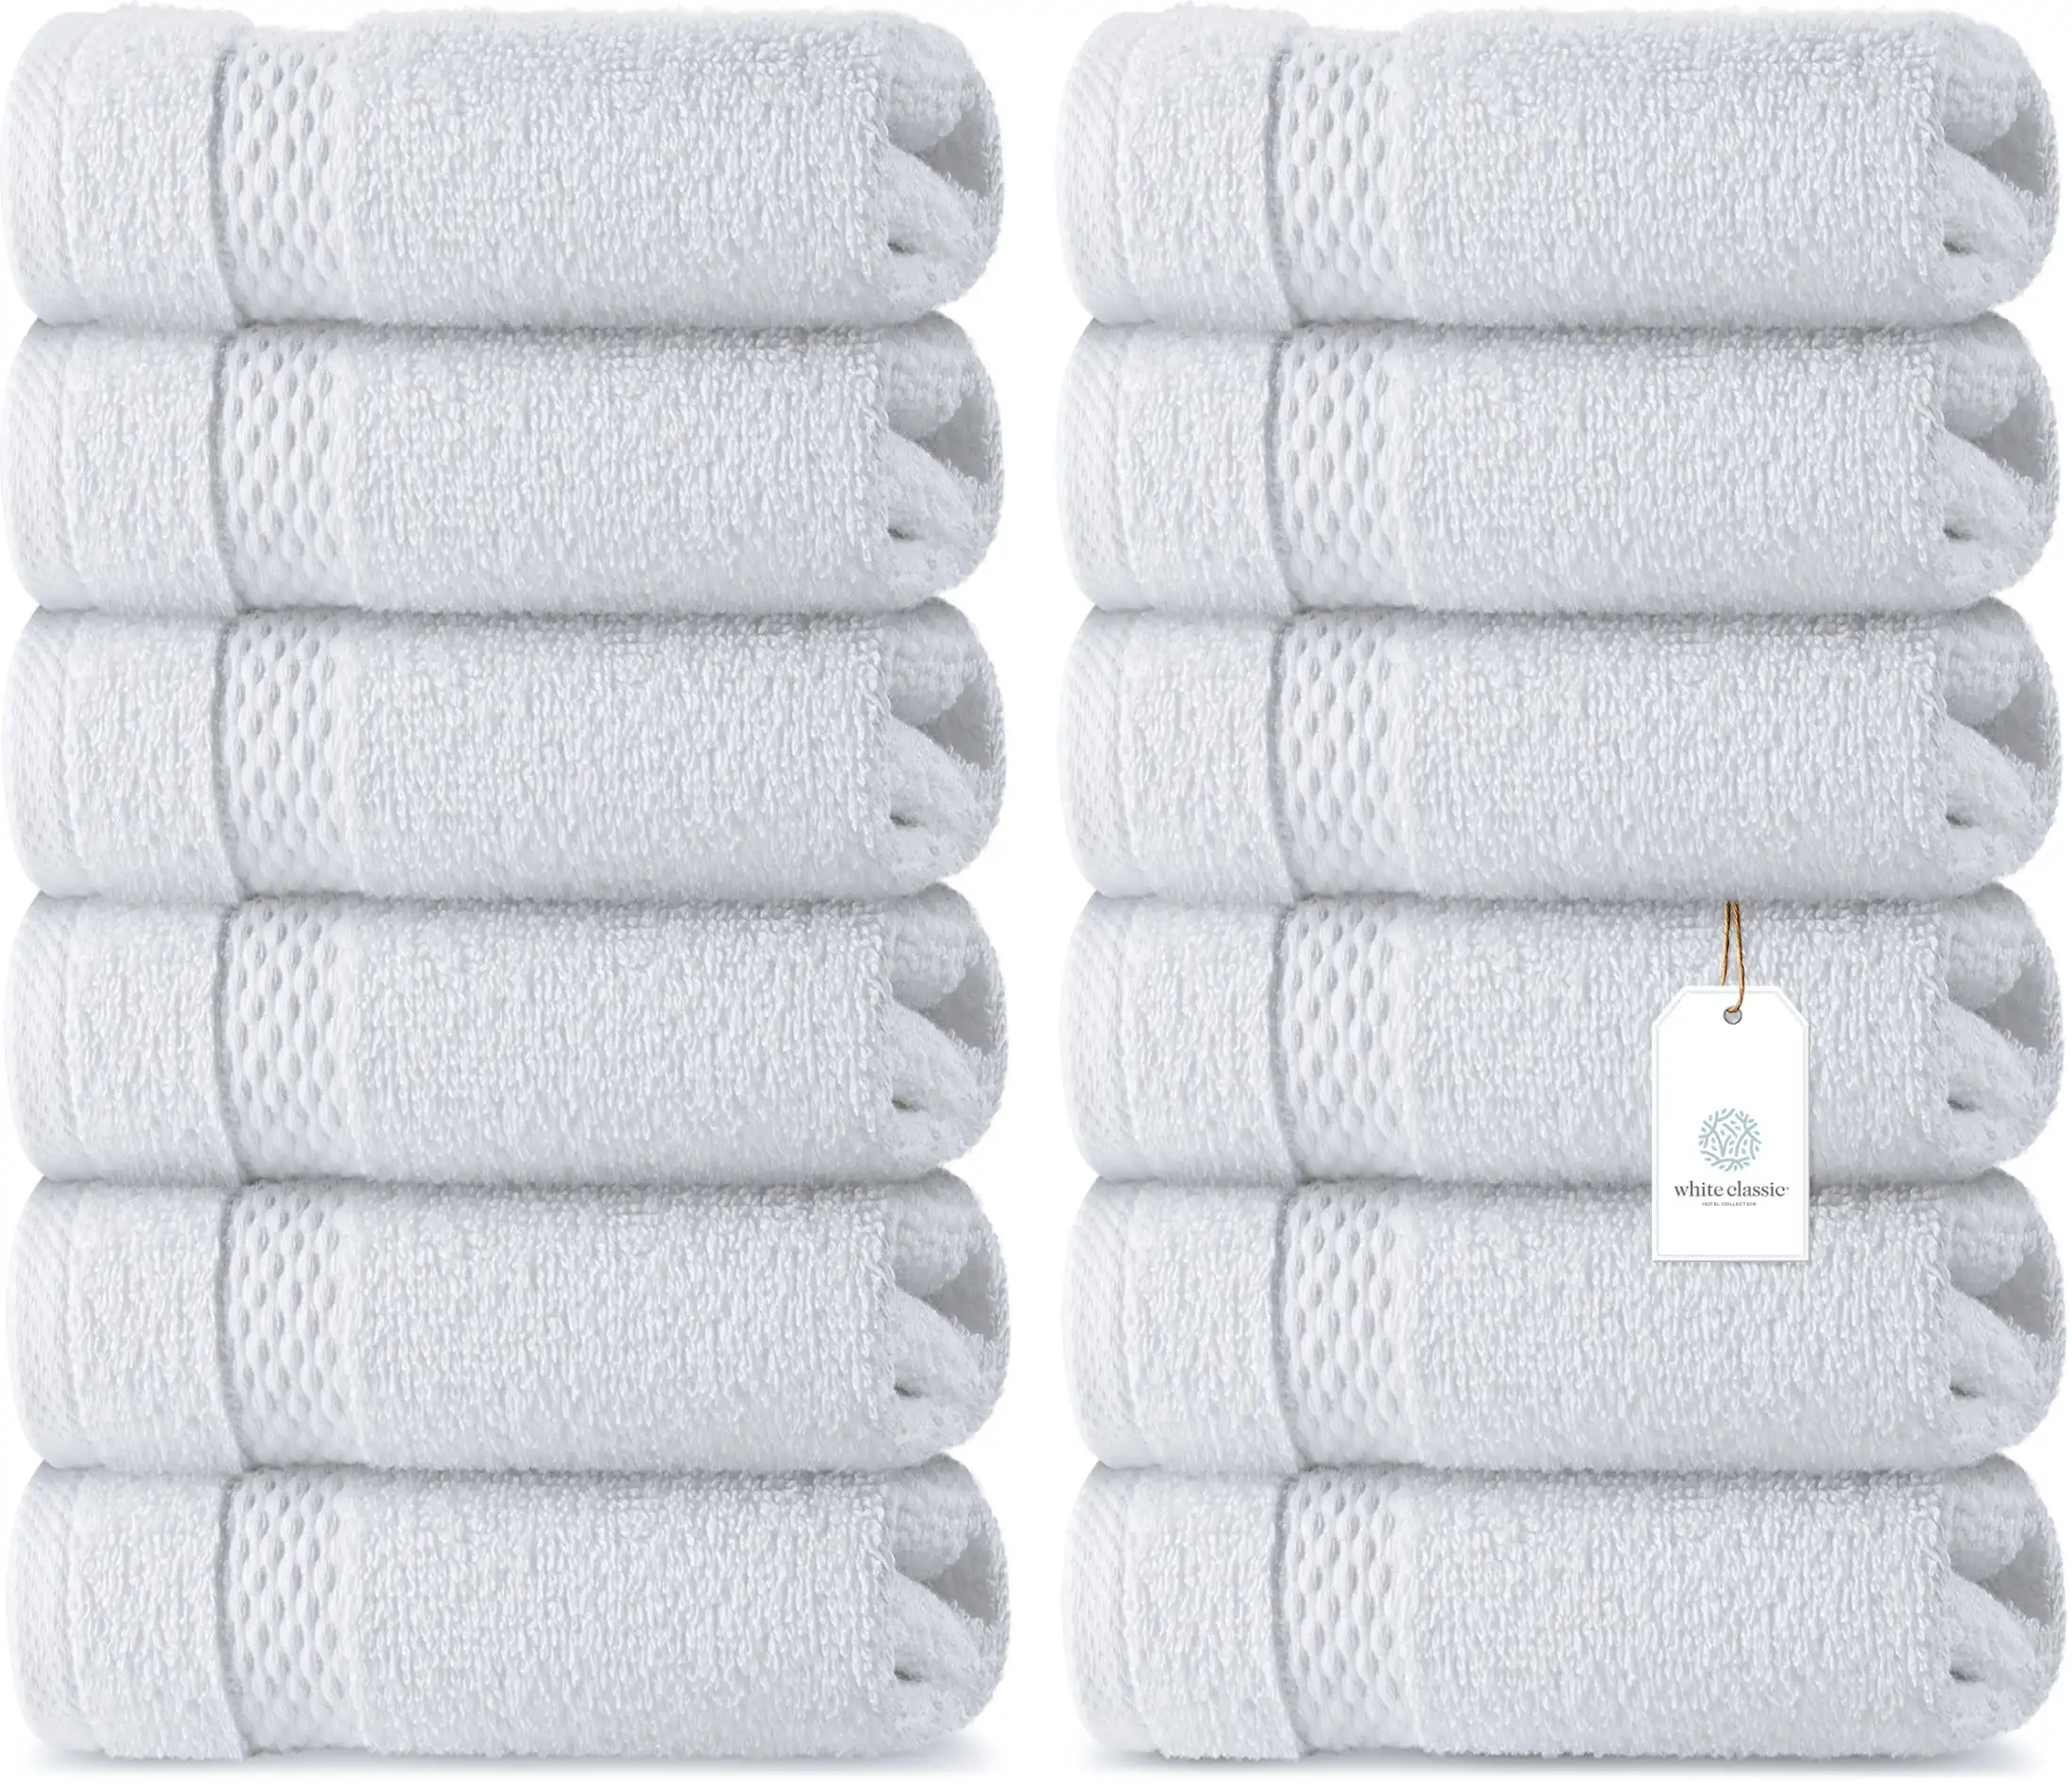 

Luxury Cotton Washcloths - Large 13x13 Face Towel, White, 12 Pack